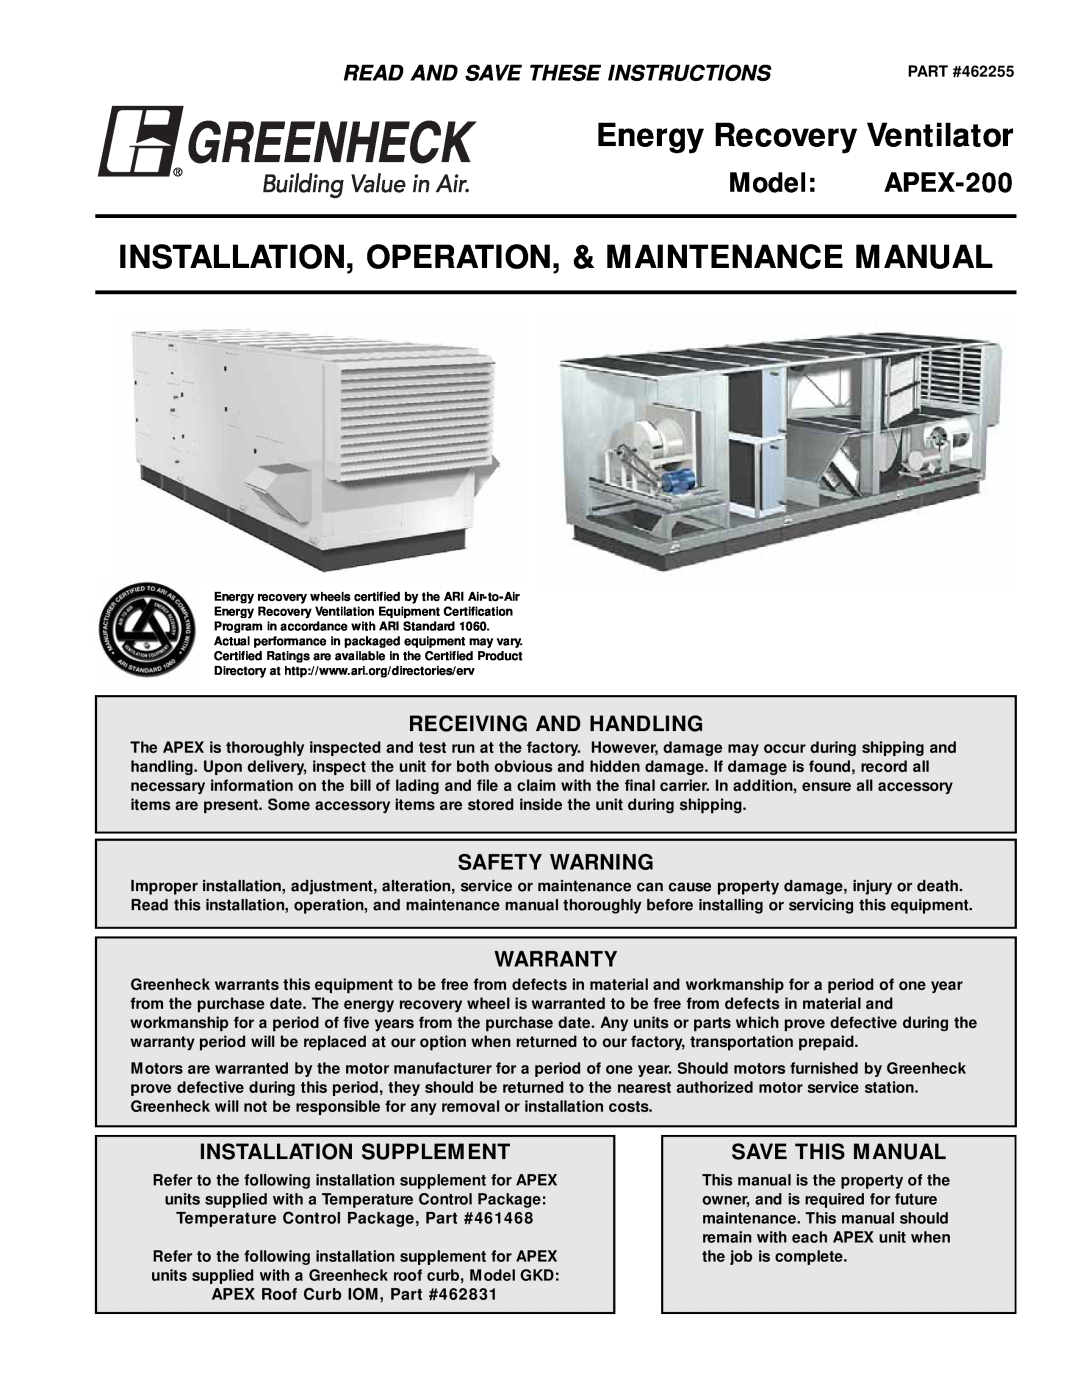 Greenheck Fan warranty Receiving And Handling, Safety Warning, Warranty, Installation Supplement, Model APEX-200 